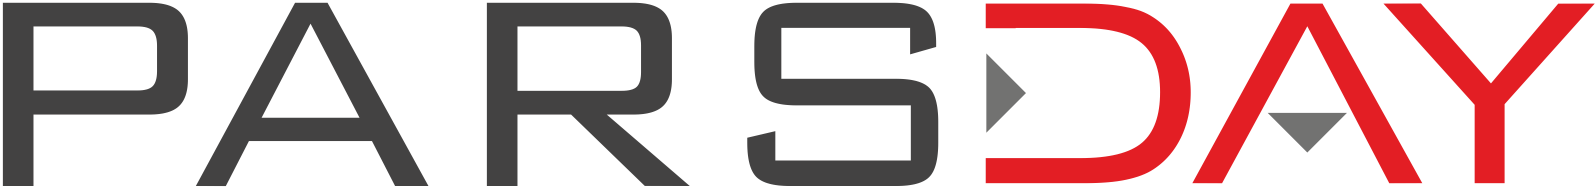 Parsday Logo